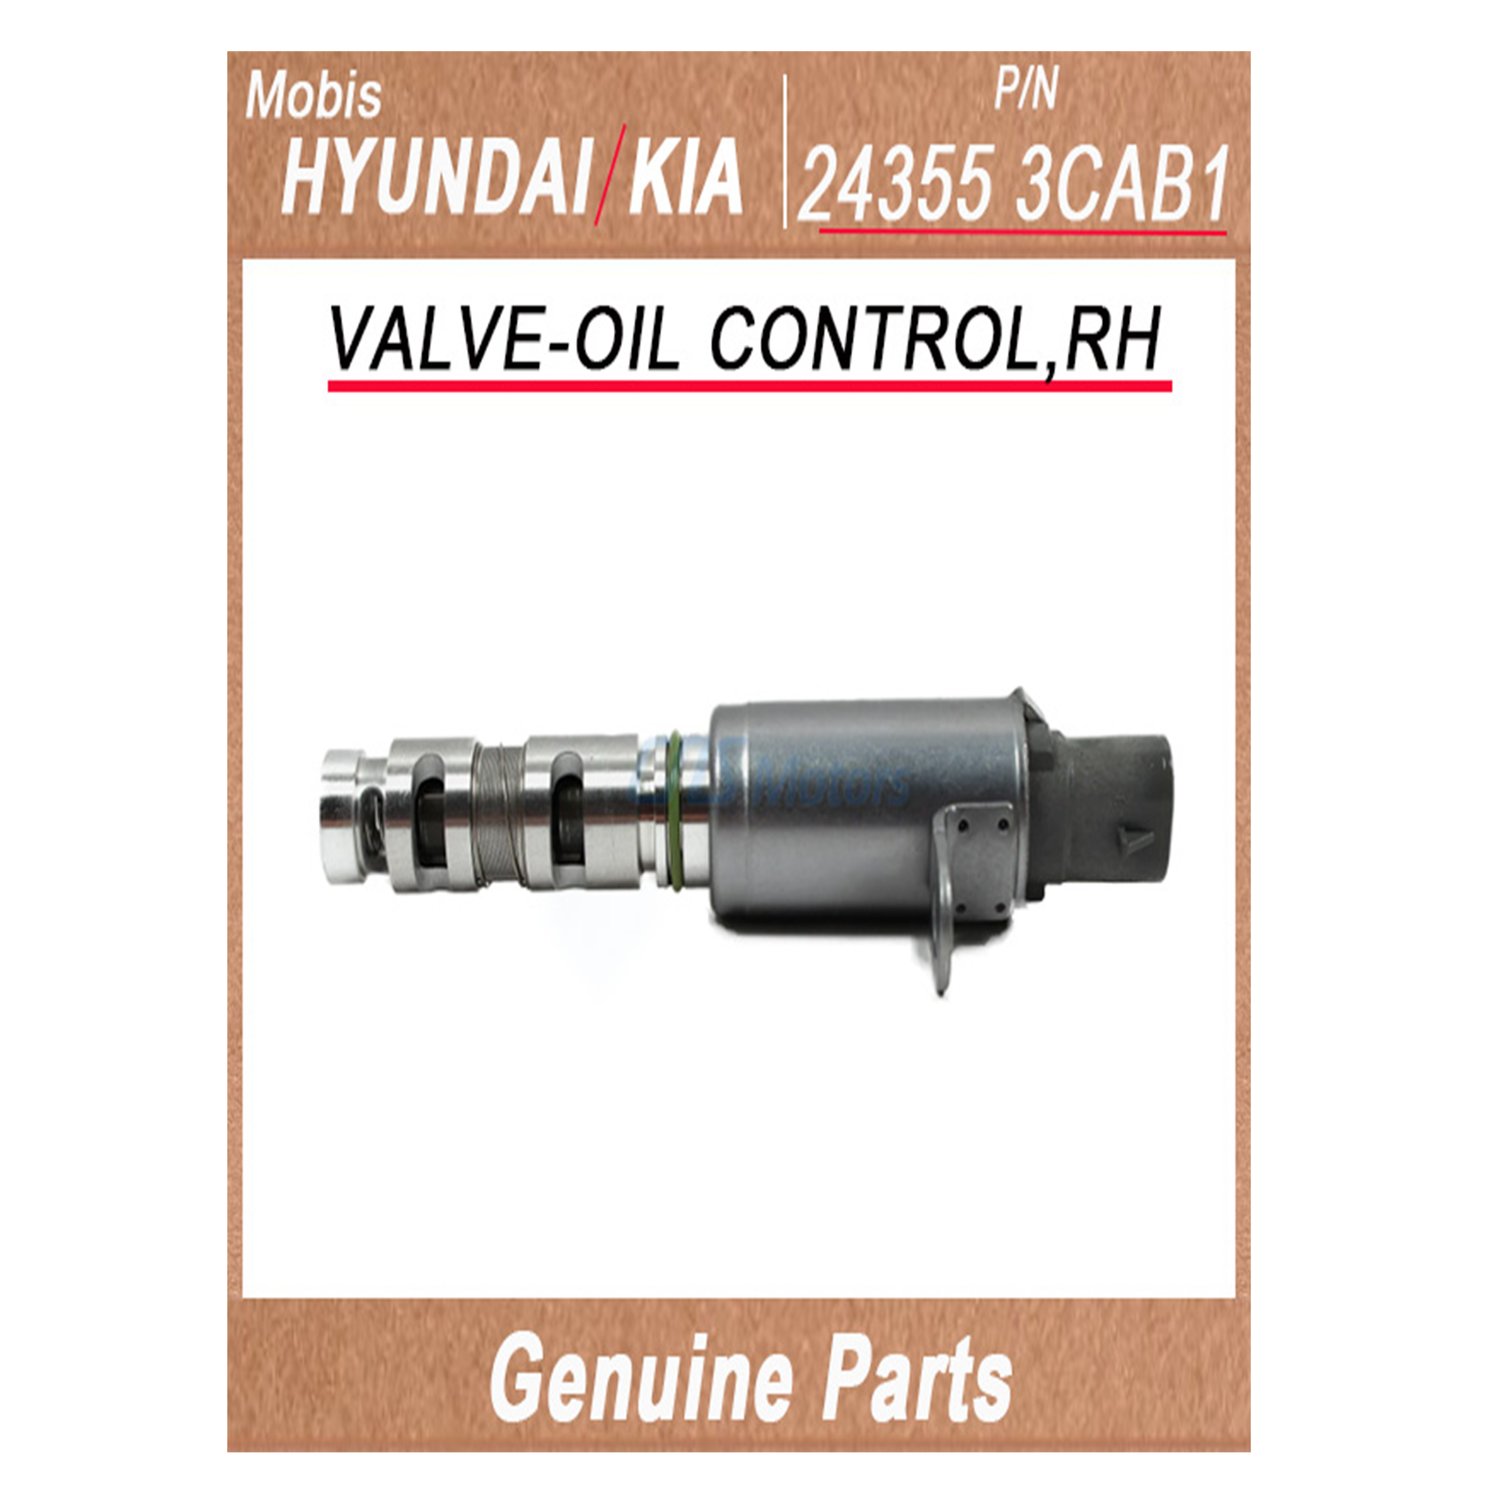 243553CAB1 _ VALVE_OIL CONTROL_RH _ Genuine Korean Automotive Spare Parts _ Hyundai Kia _Mobis_